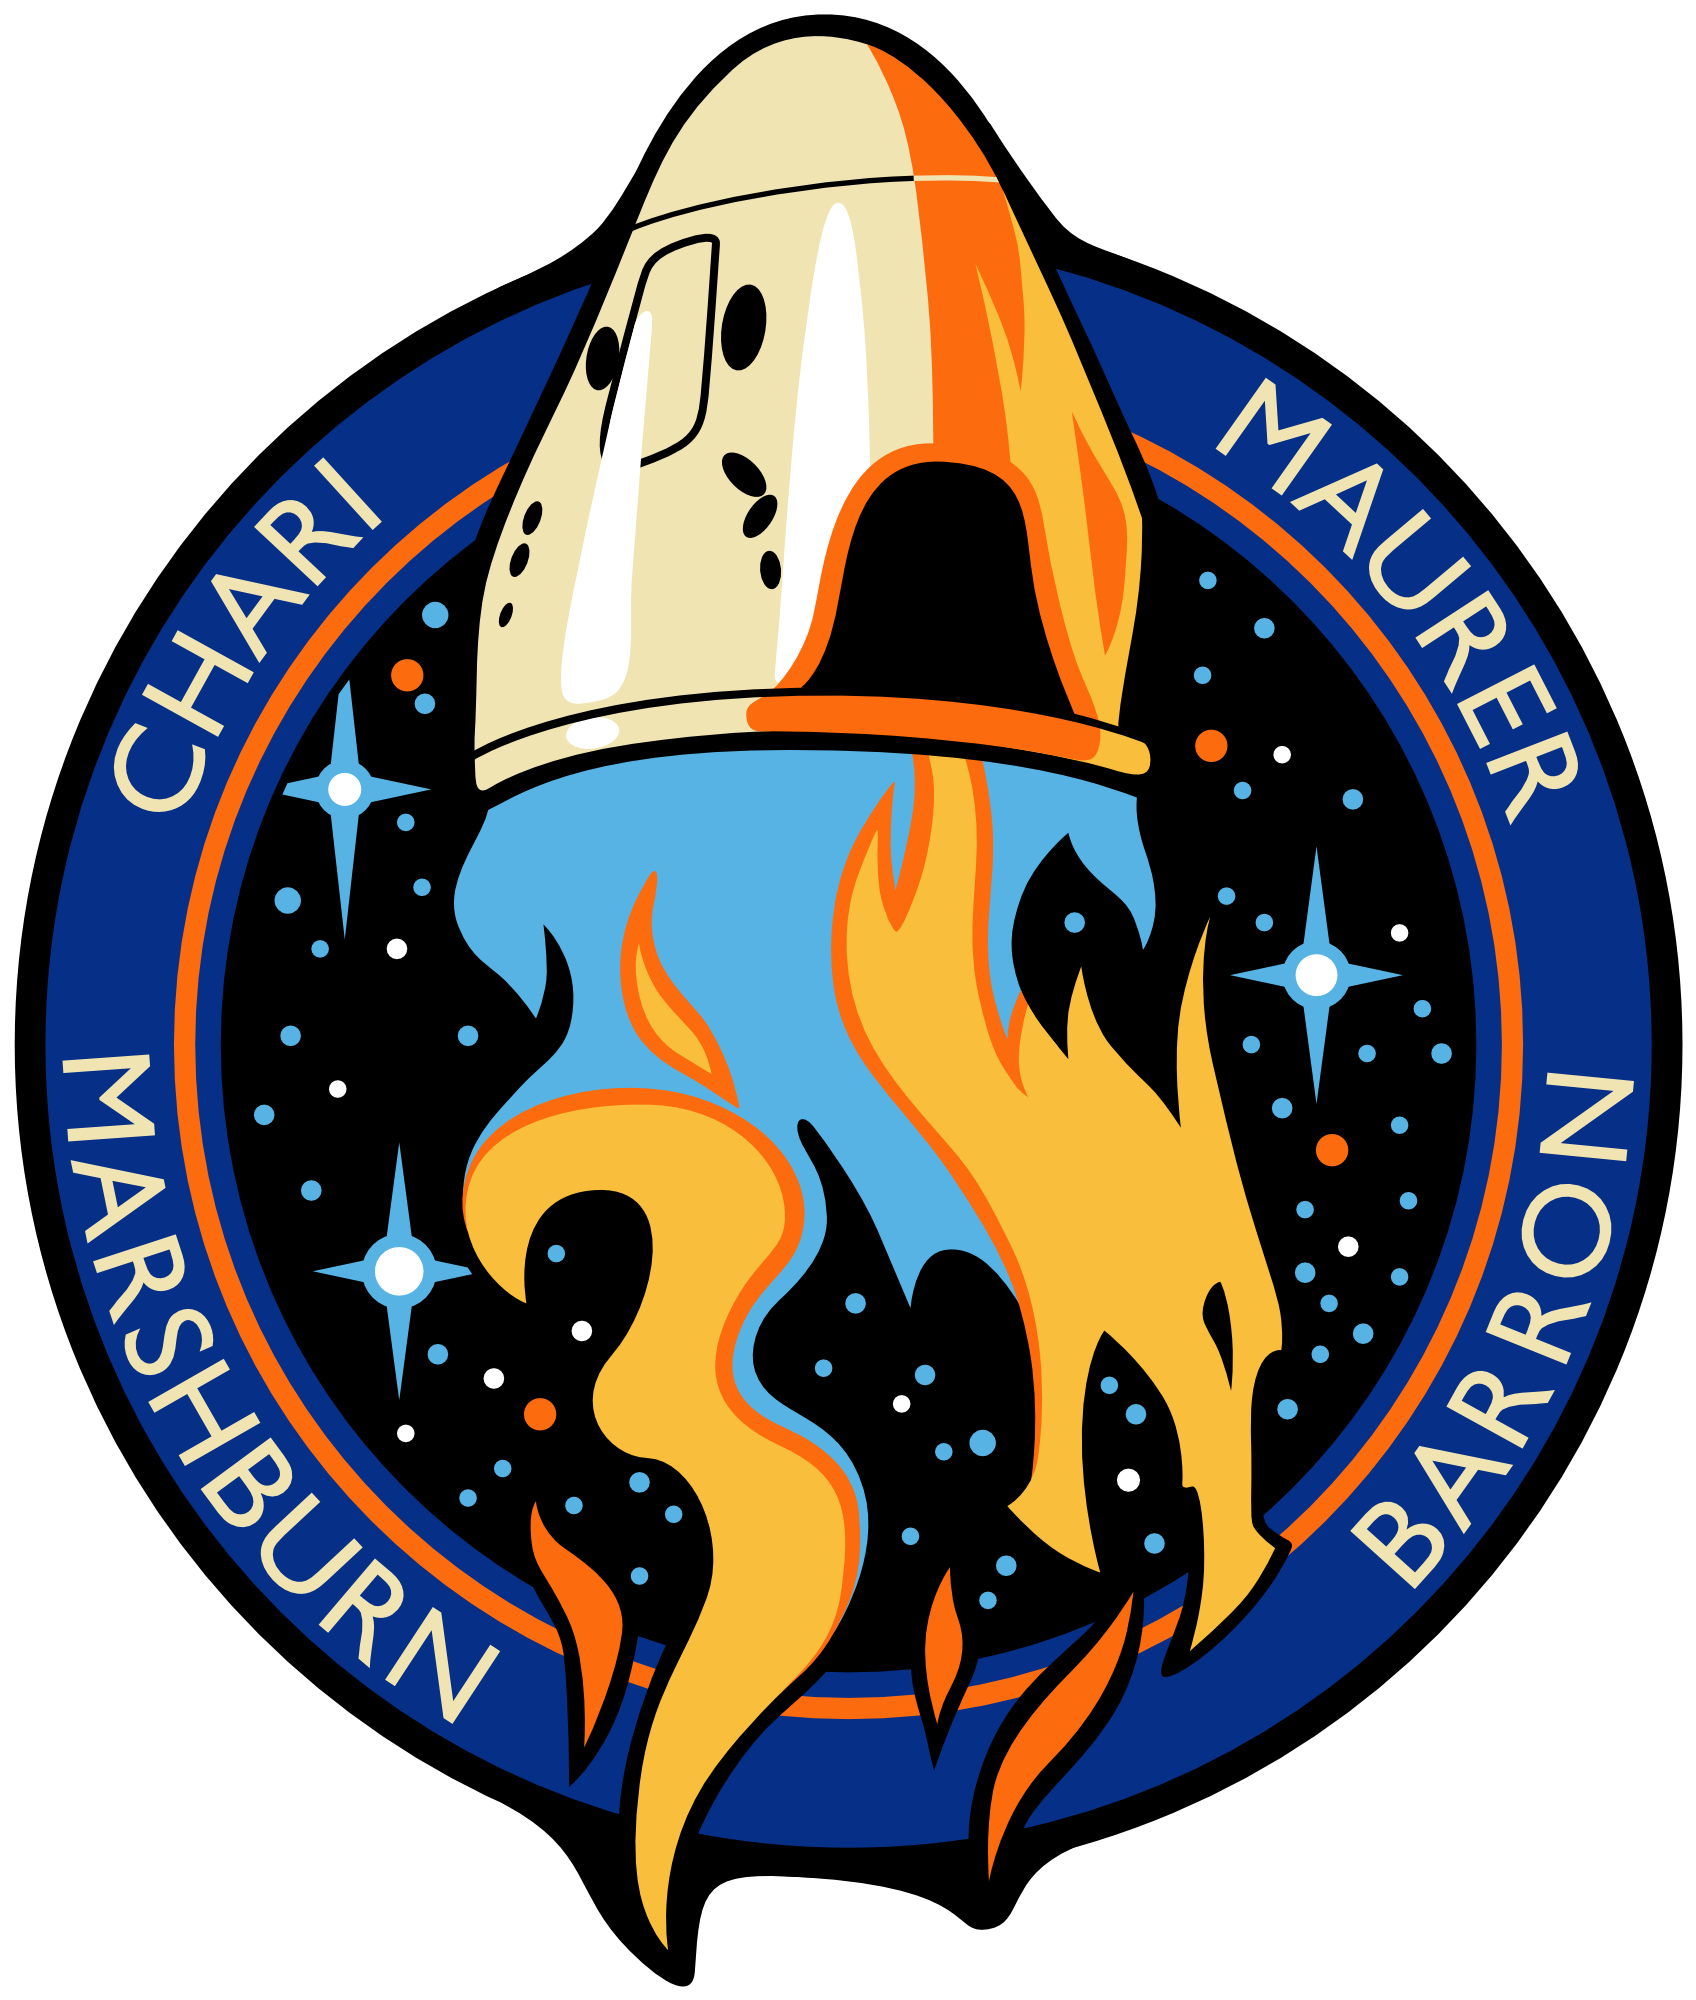 SpaceX_Crew-3_logo